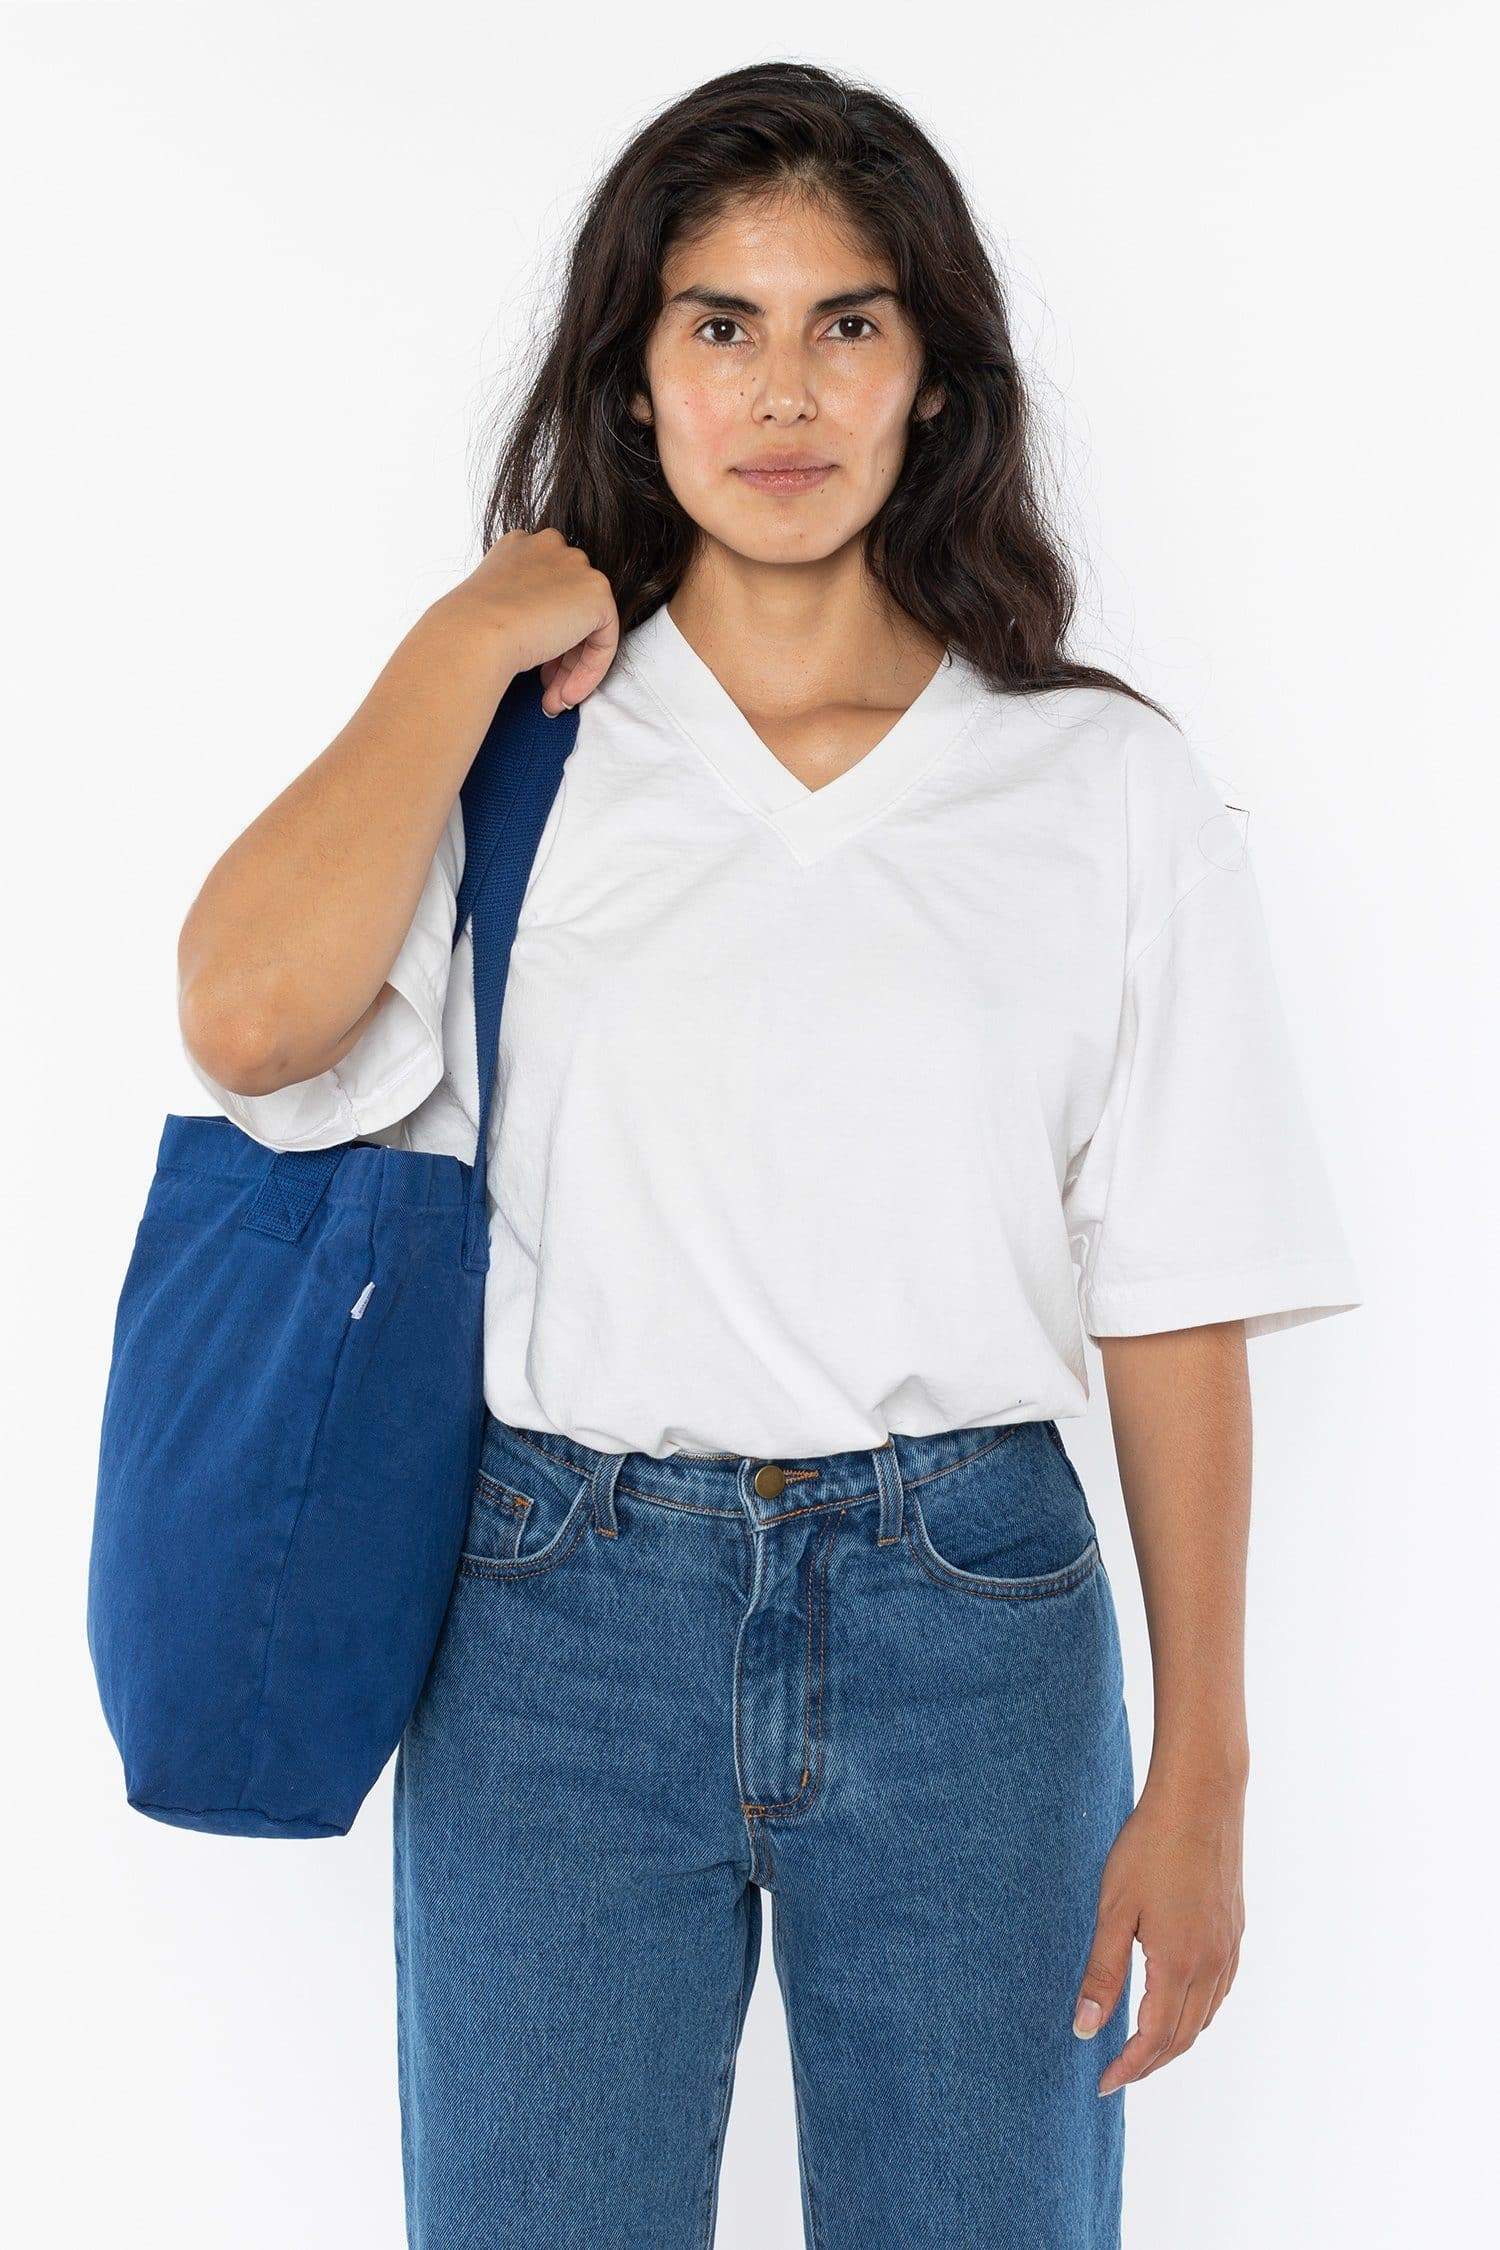 Yucurem Minimalist Style Large Capacity Canvas Shoulder Bags Unisex Satchel  for School Travel Outdoor (Black) - Walmart.com